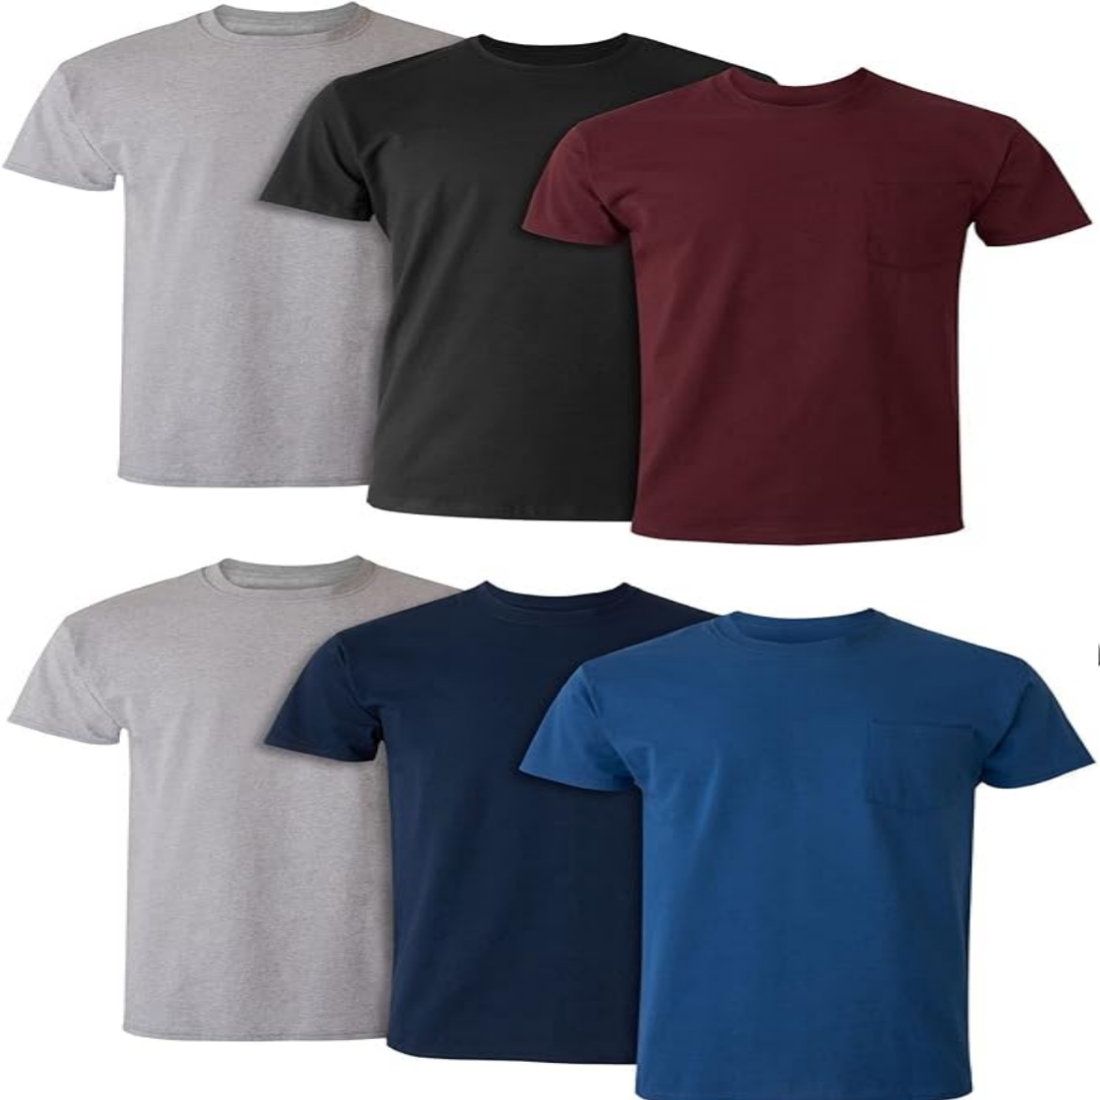 True Classic Tees | Staples |6-Shirt Pack | Premium Fitted Men’s T-Shirts |  Crew Neck